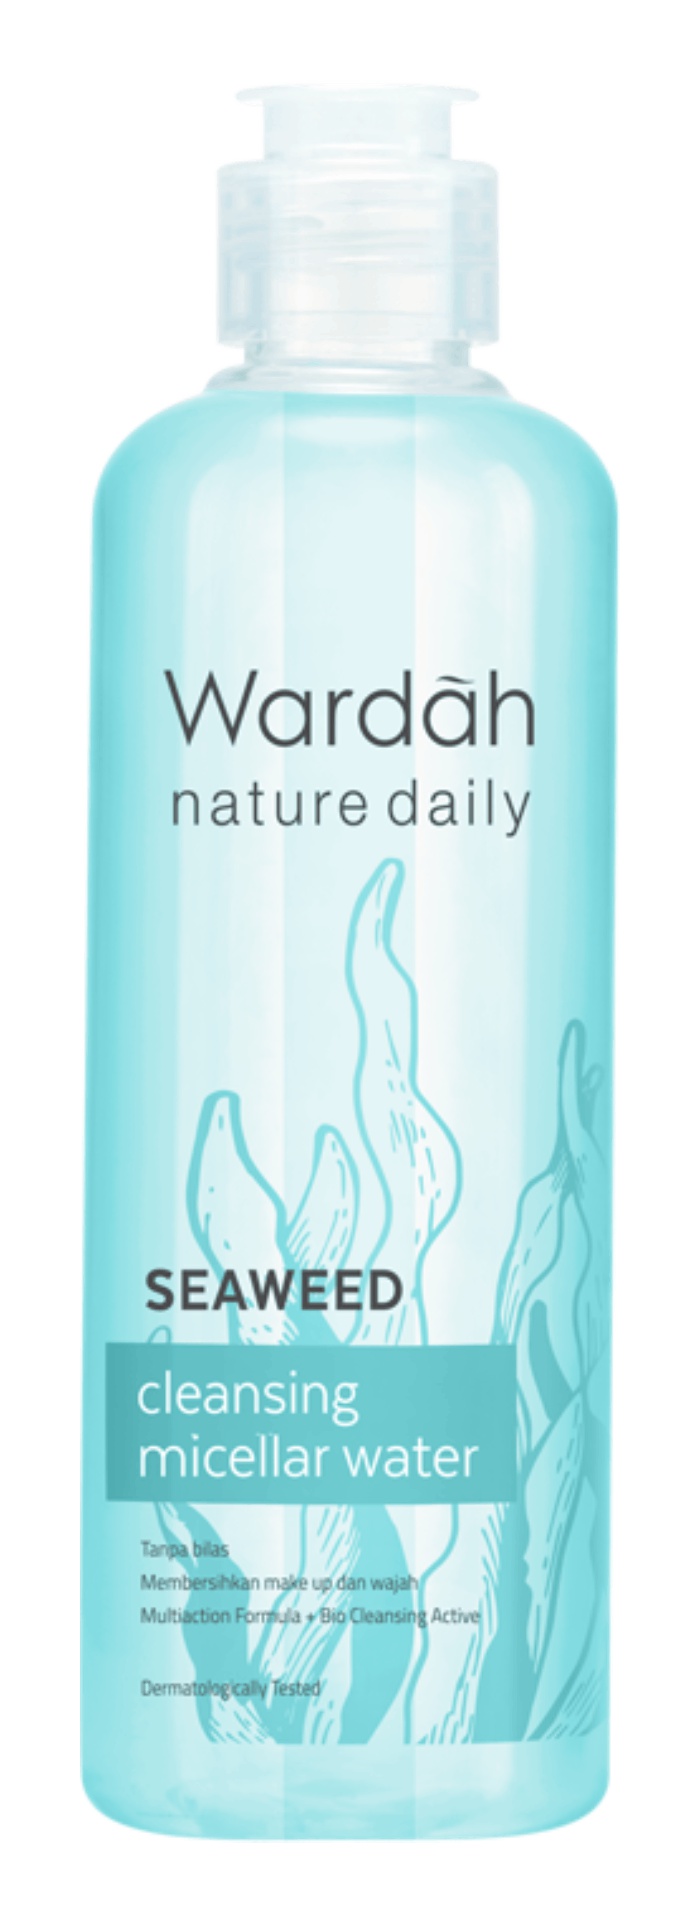 Wardah Nature Daily Aloe Seaweed Cleansing Micellar Water